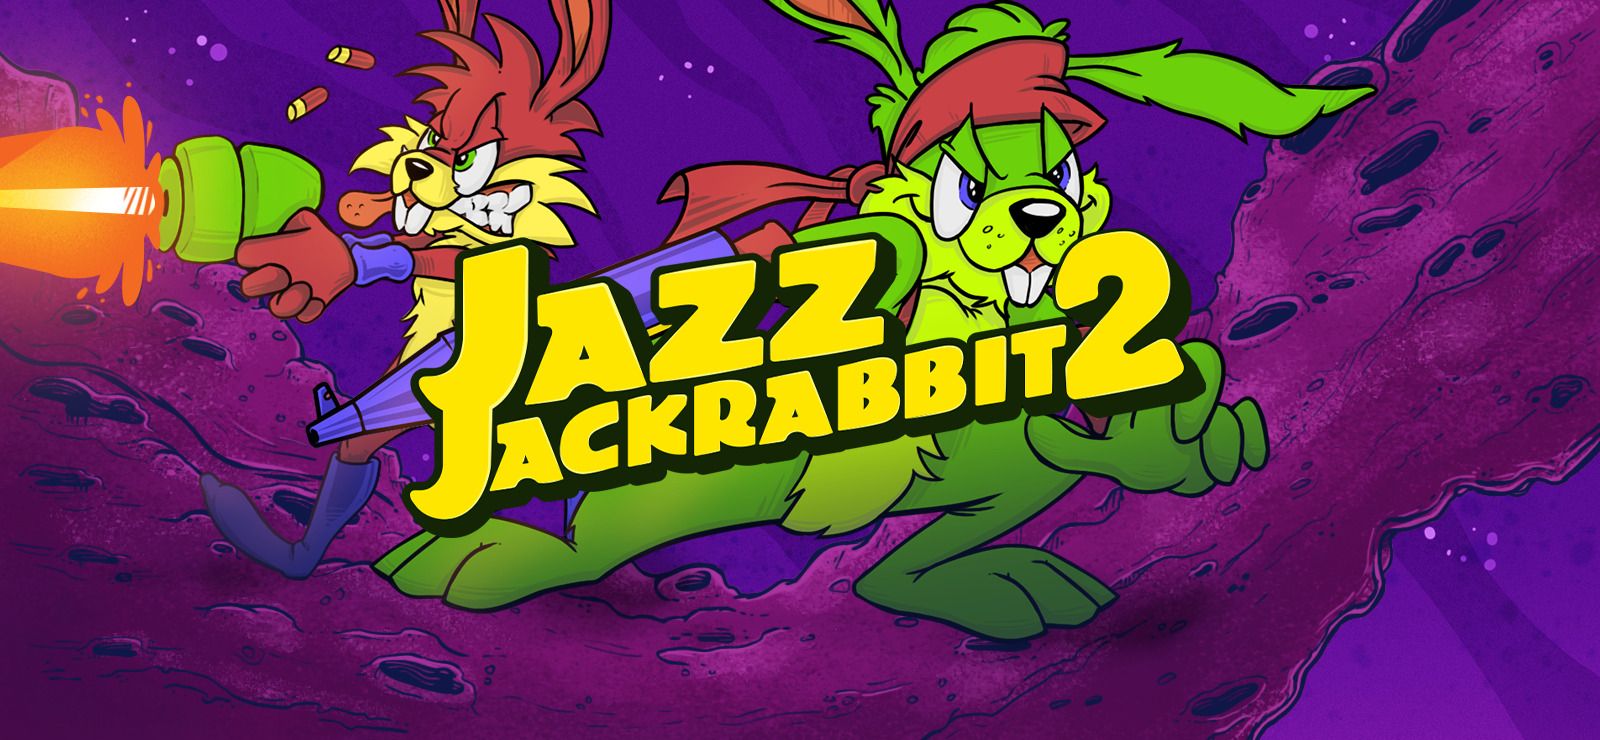 Free PC Game: Jazz Jackrabbit Collection 2 is free at GOG until Nov 2nd